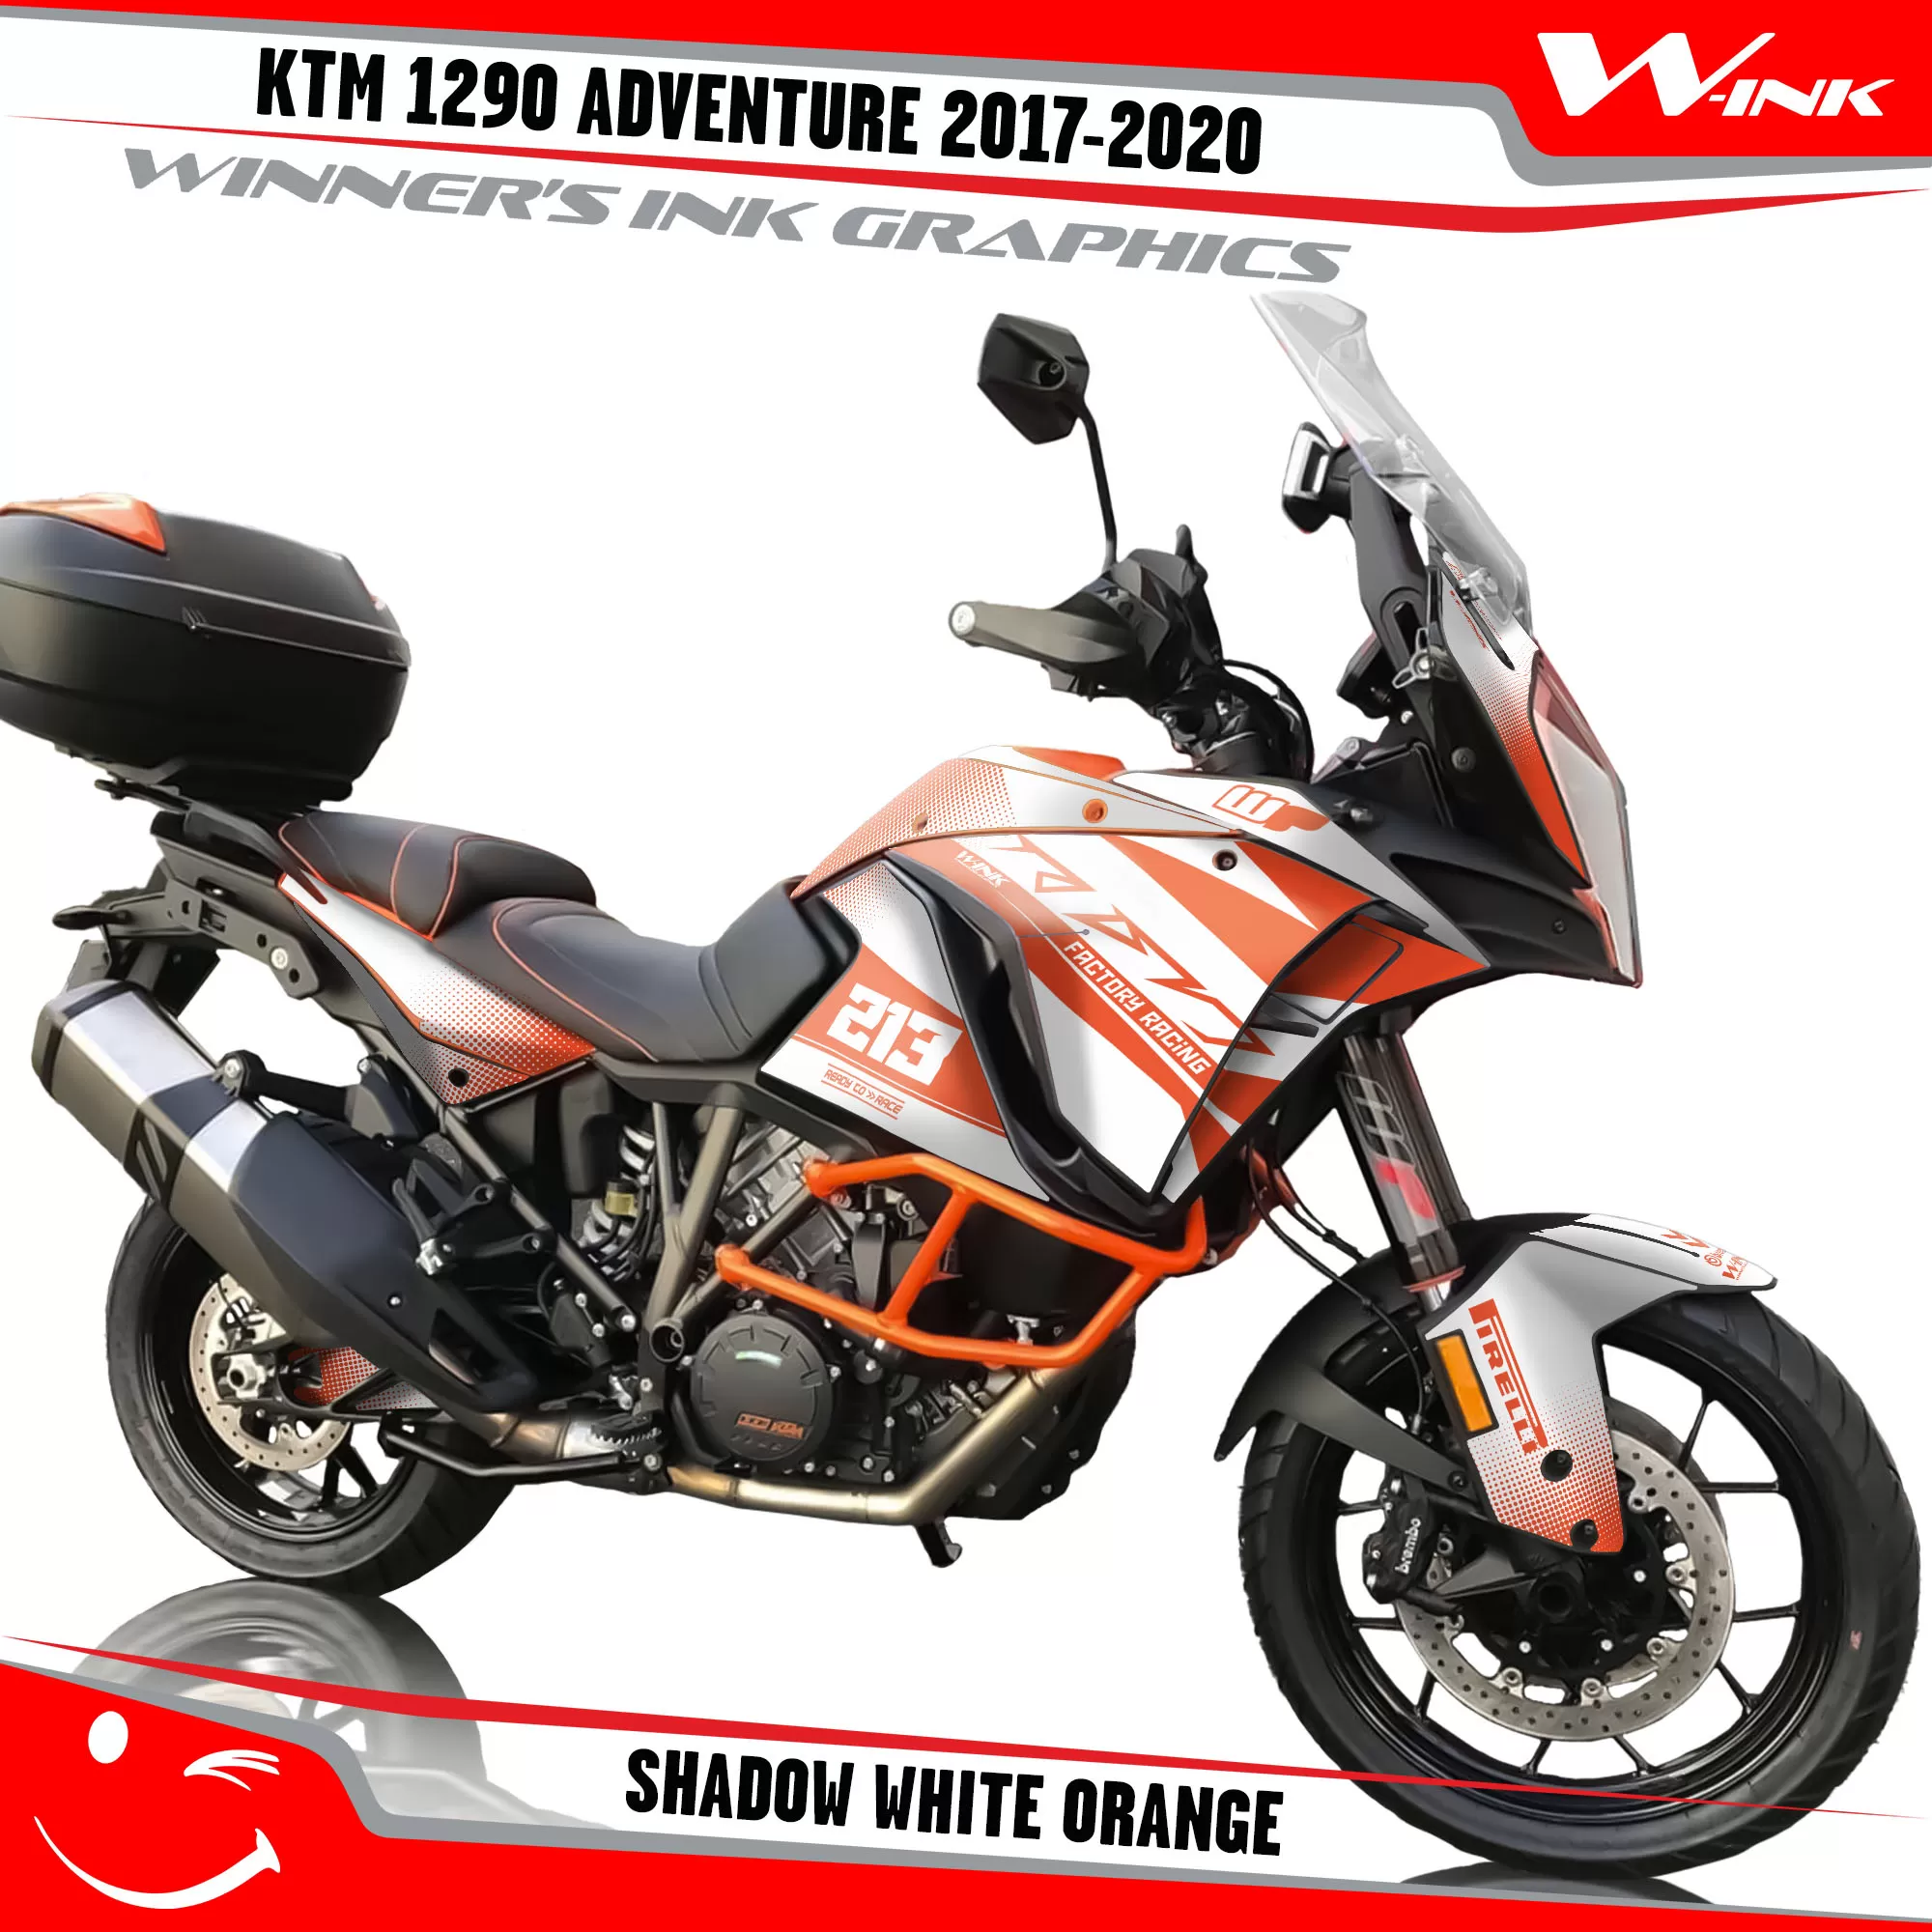 KTM-Adventure-1290-2017-2018-2019-2020-graphics-kit-and-decals-Shadow-White-Orange